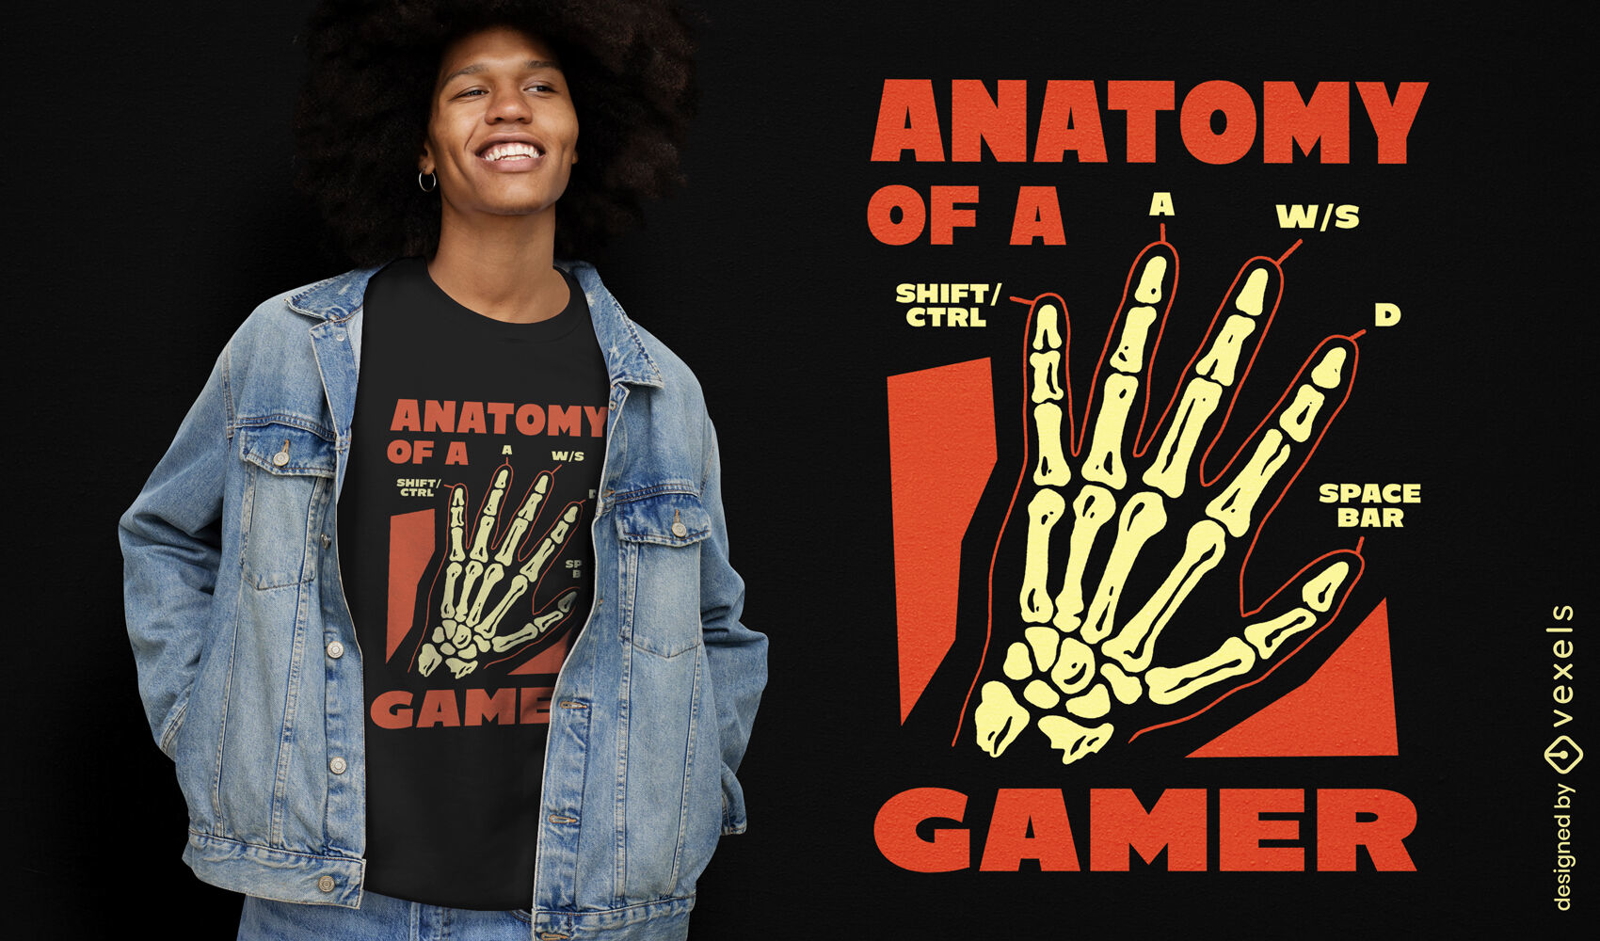 Anatomy of a gamer t-shirt design